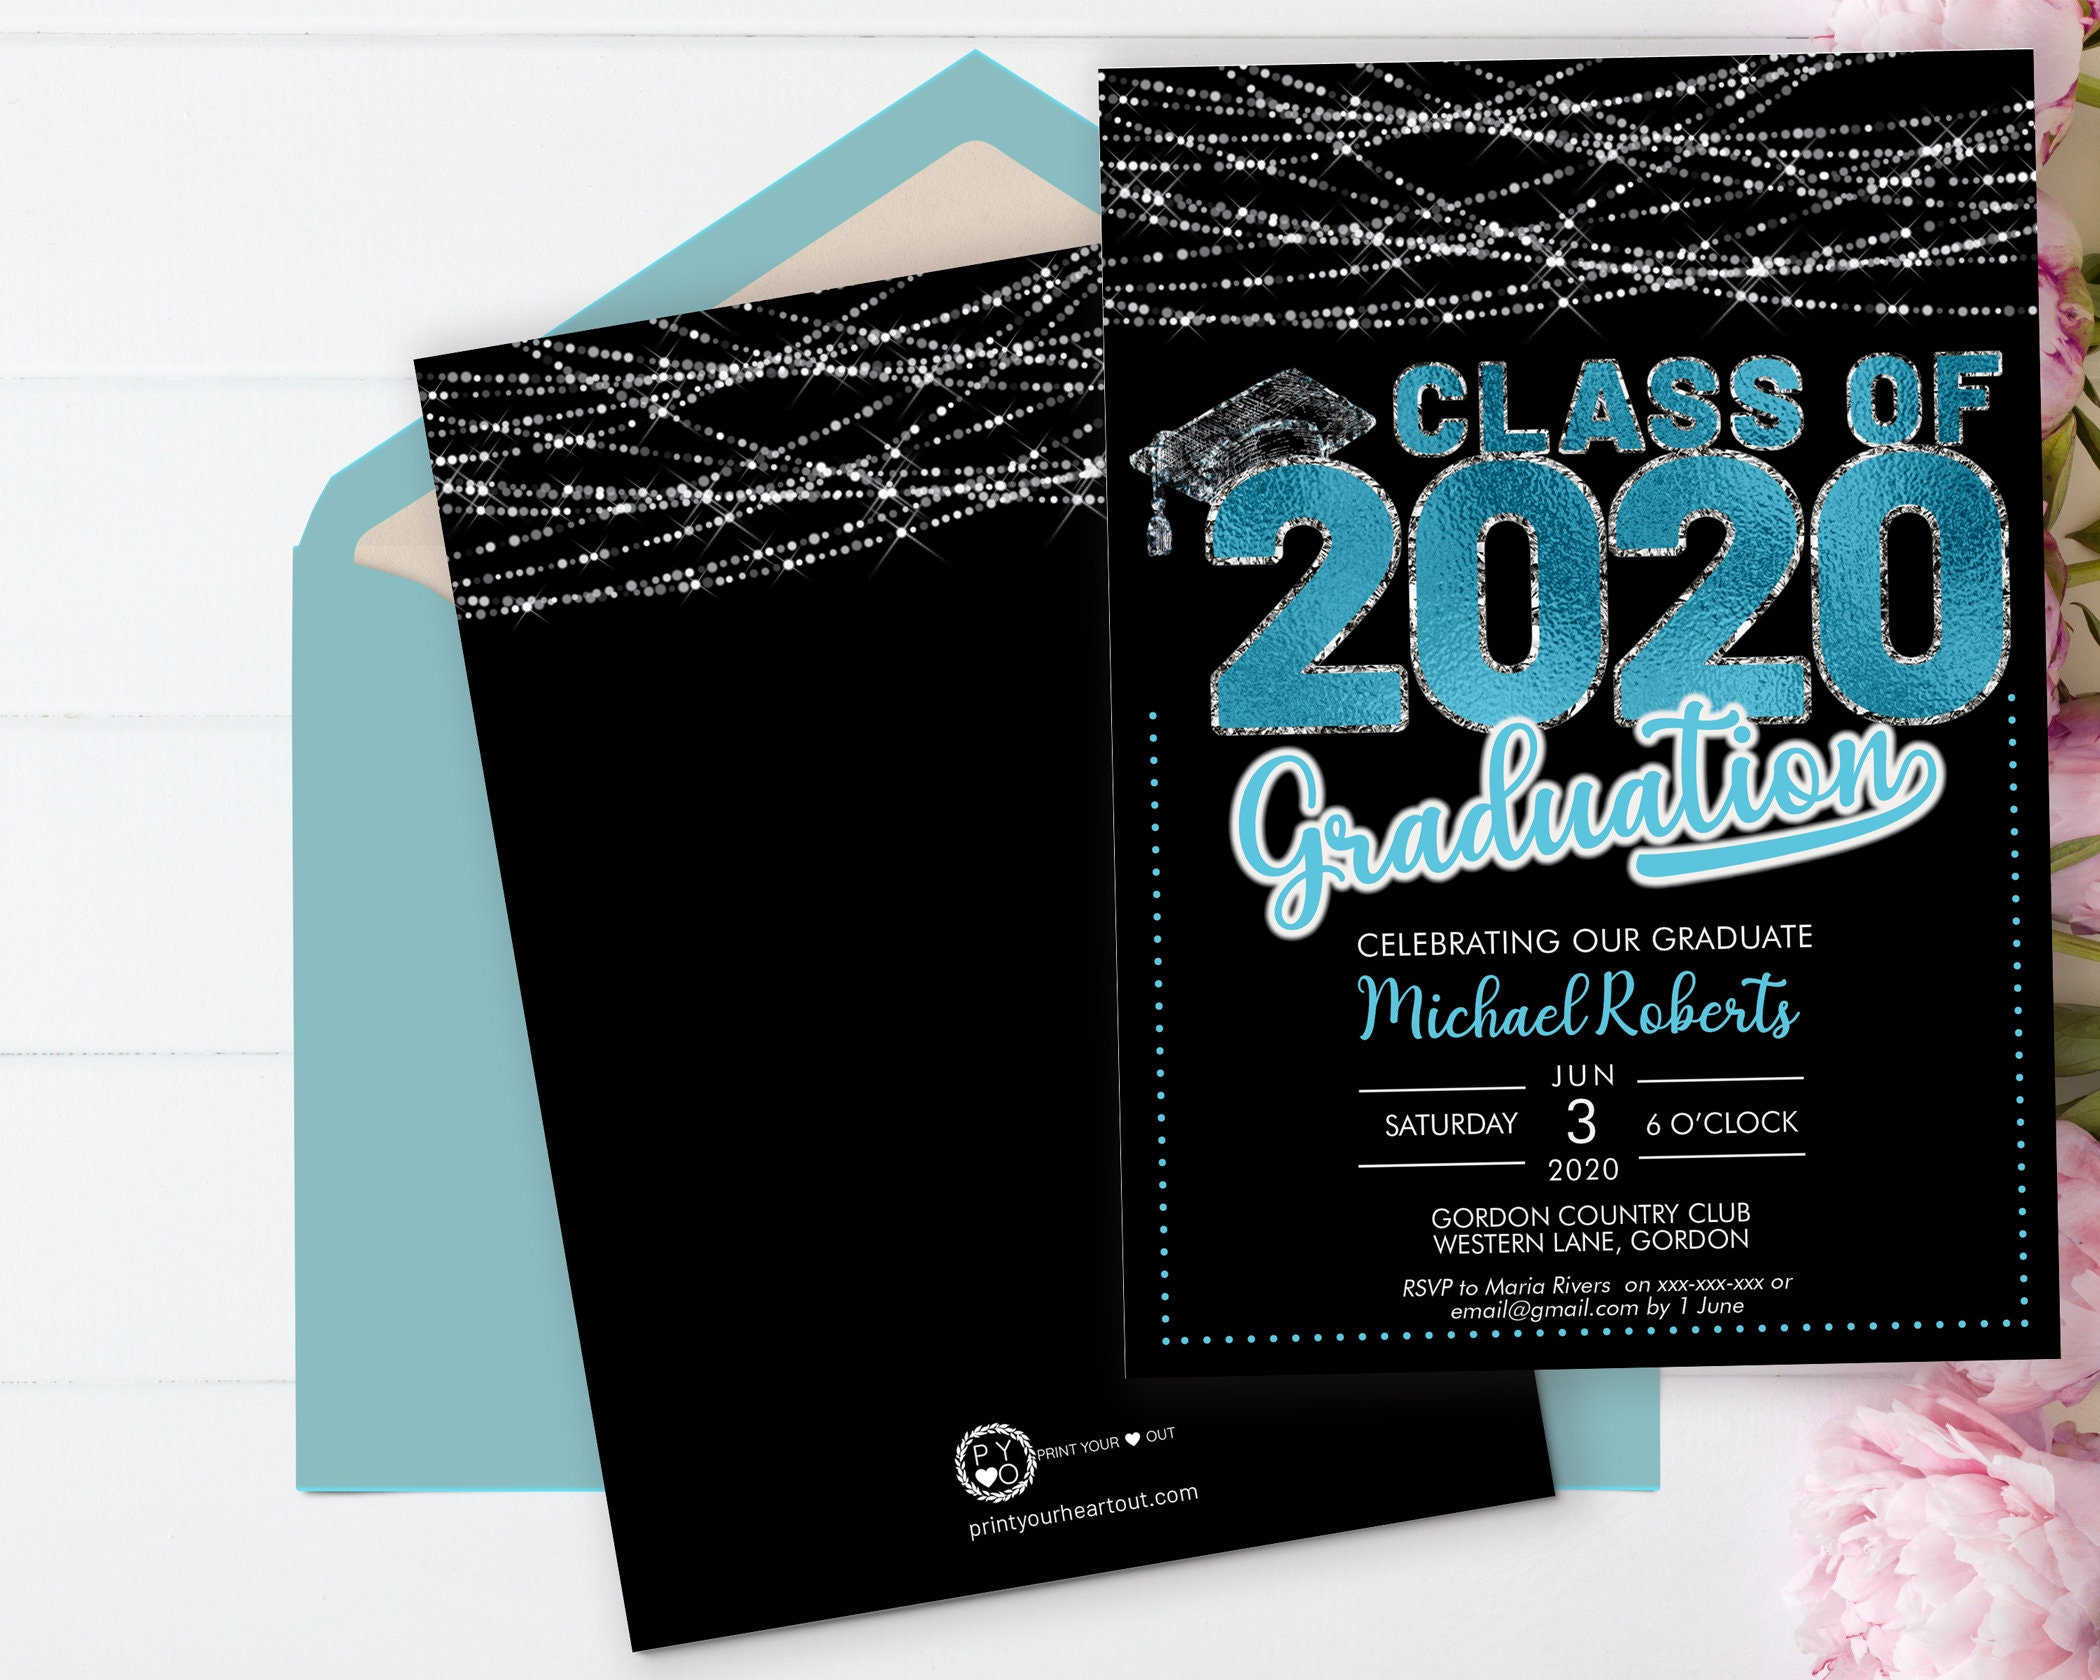 Class of 2020 Aqua Graduation Invitation Printable Template, Black